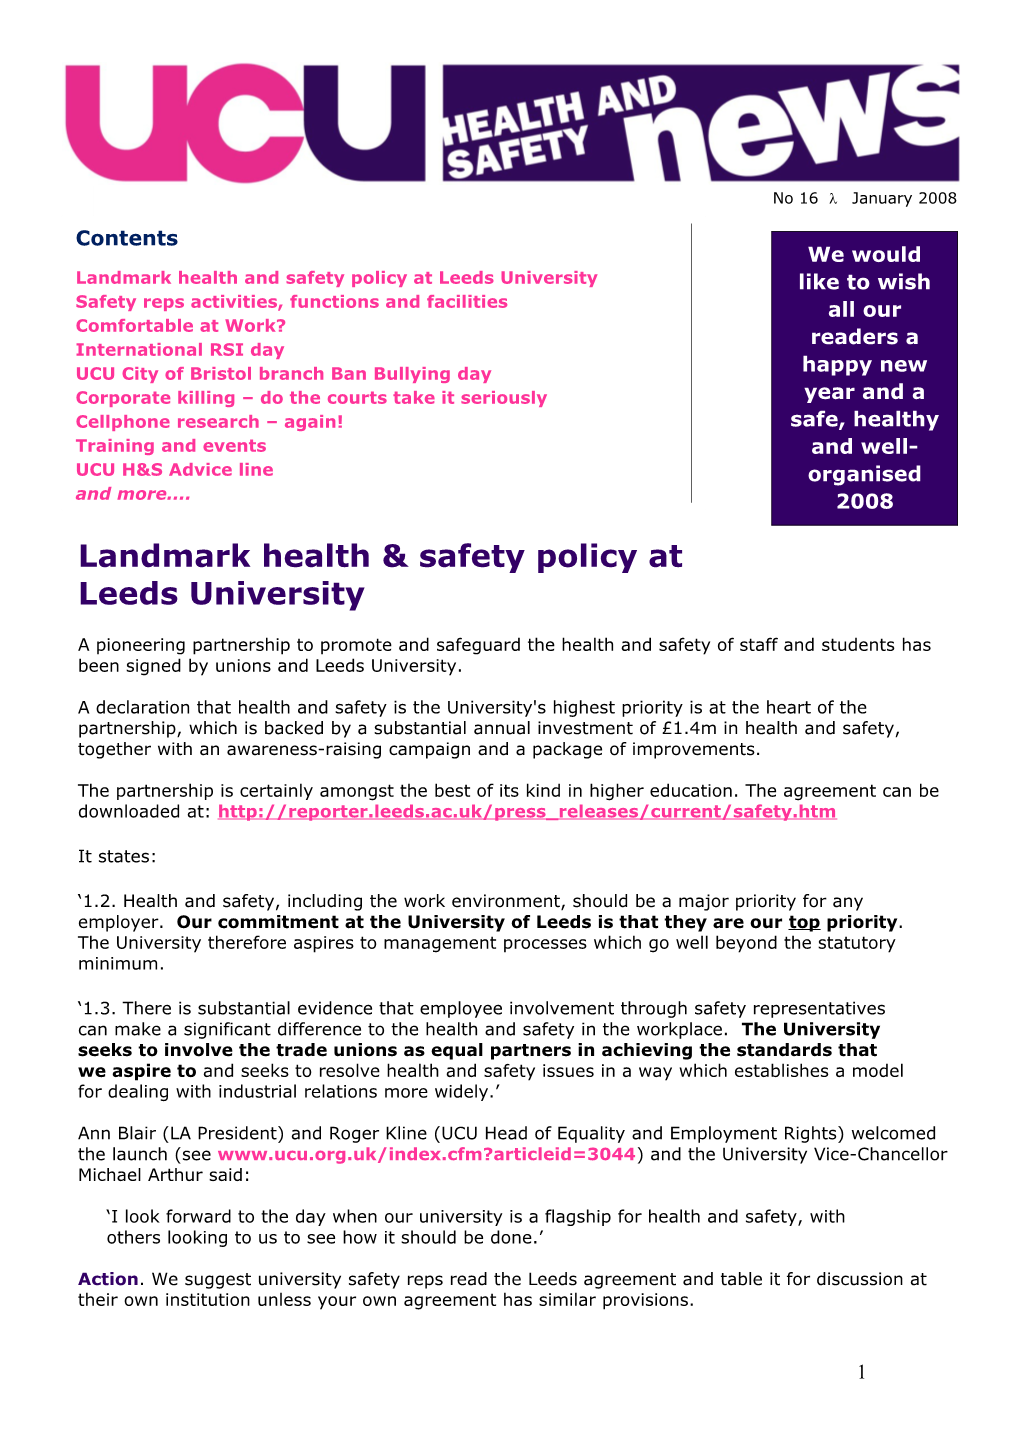 Landmark Health & Safety Policy at Leedsuniversity